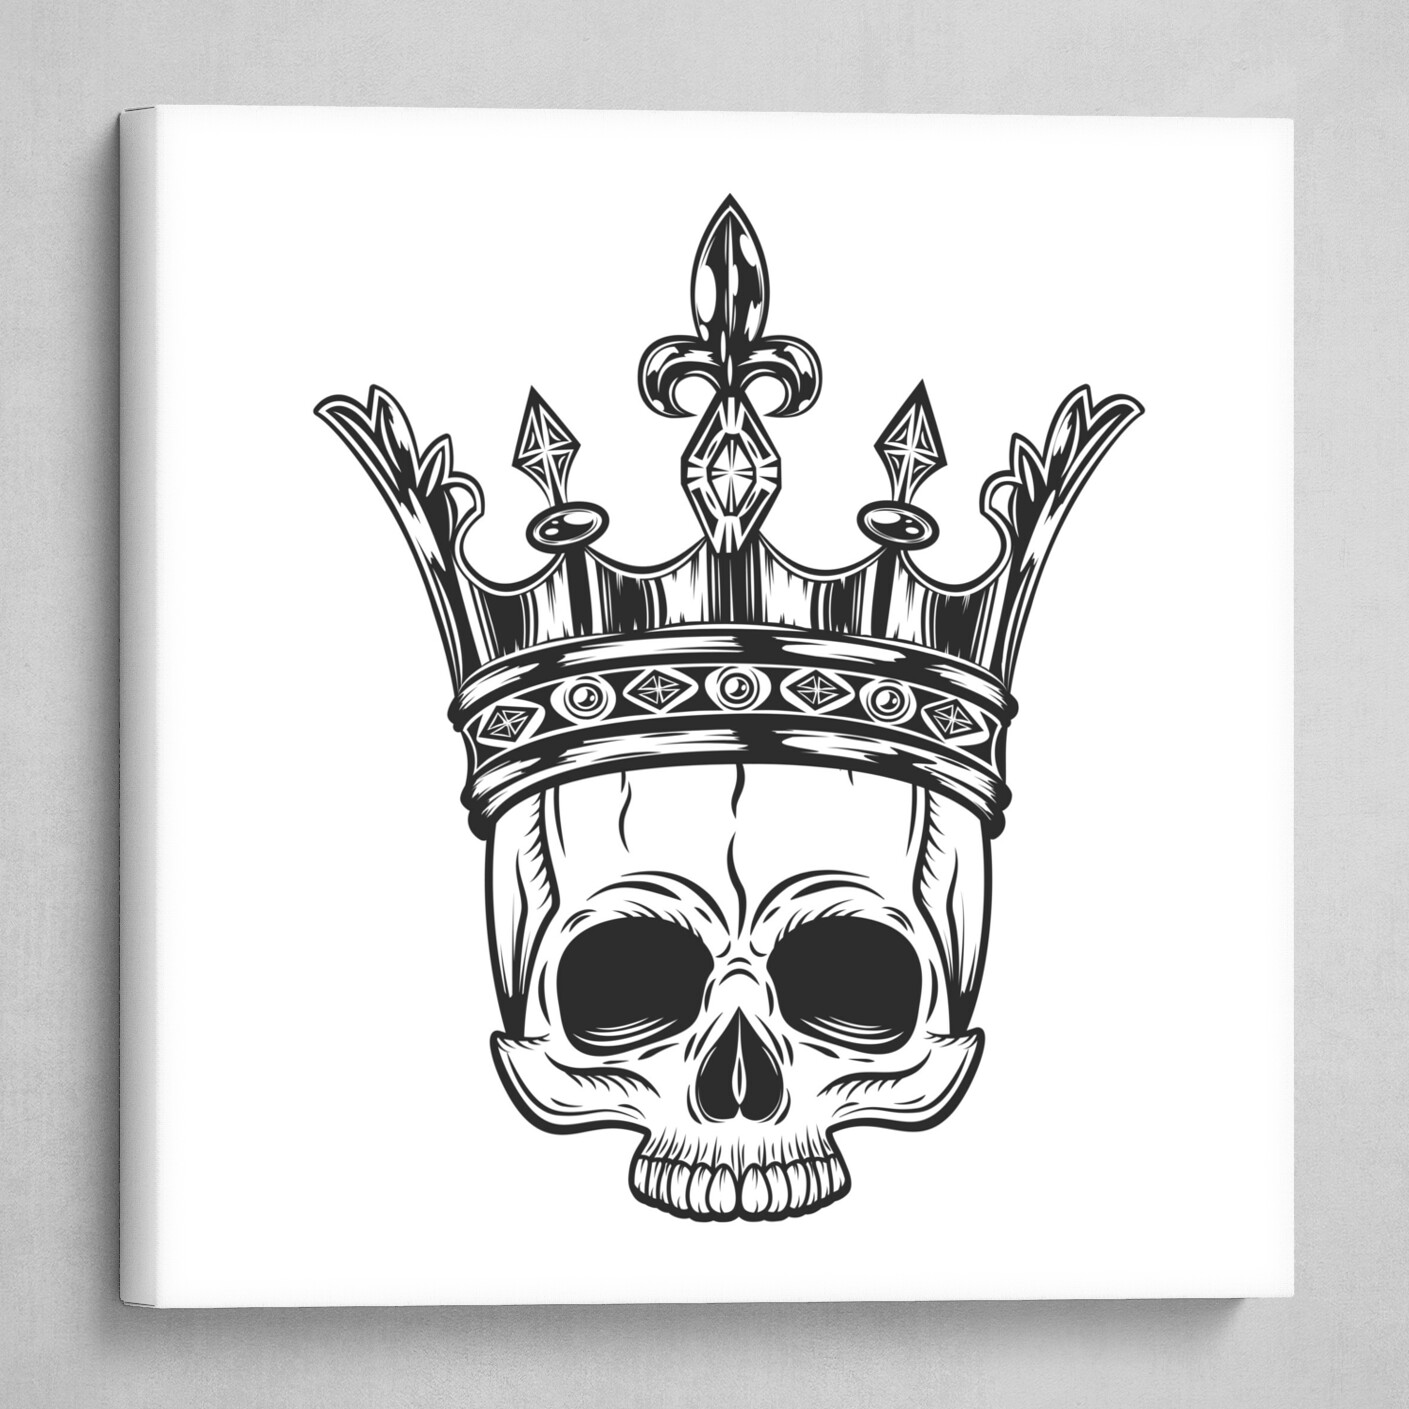 Elegant black imperial crown with intricate designs on Craiyon